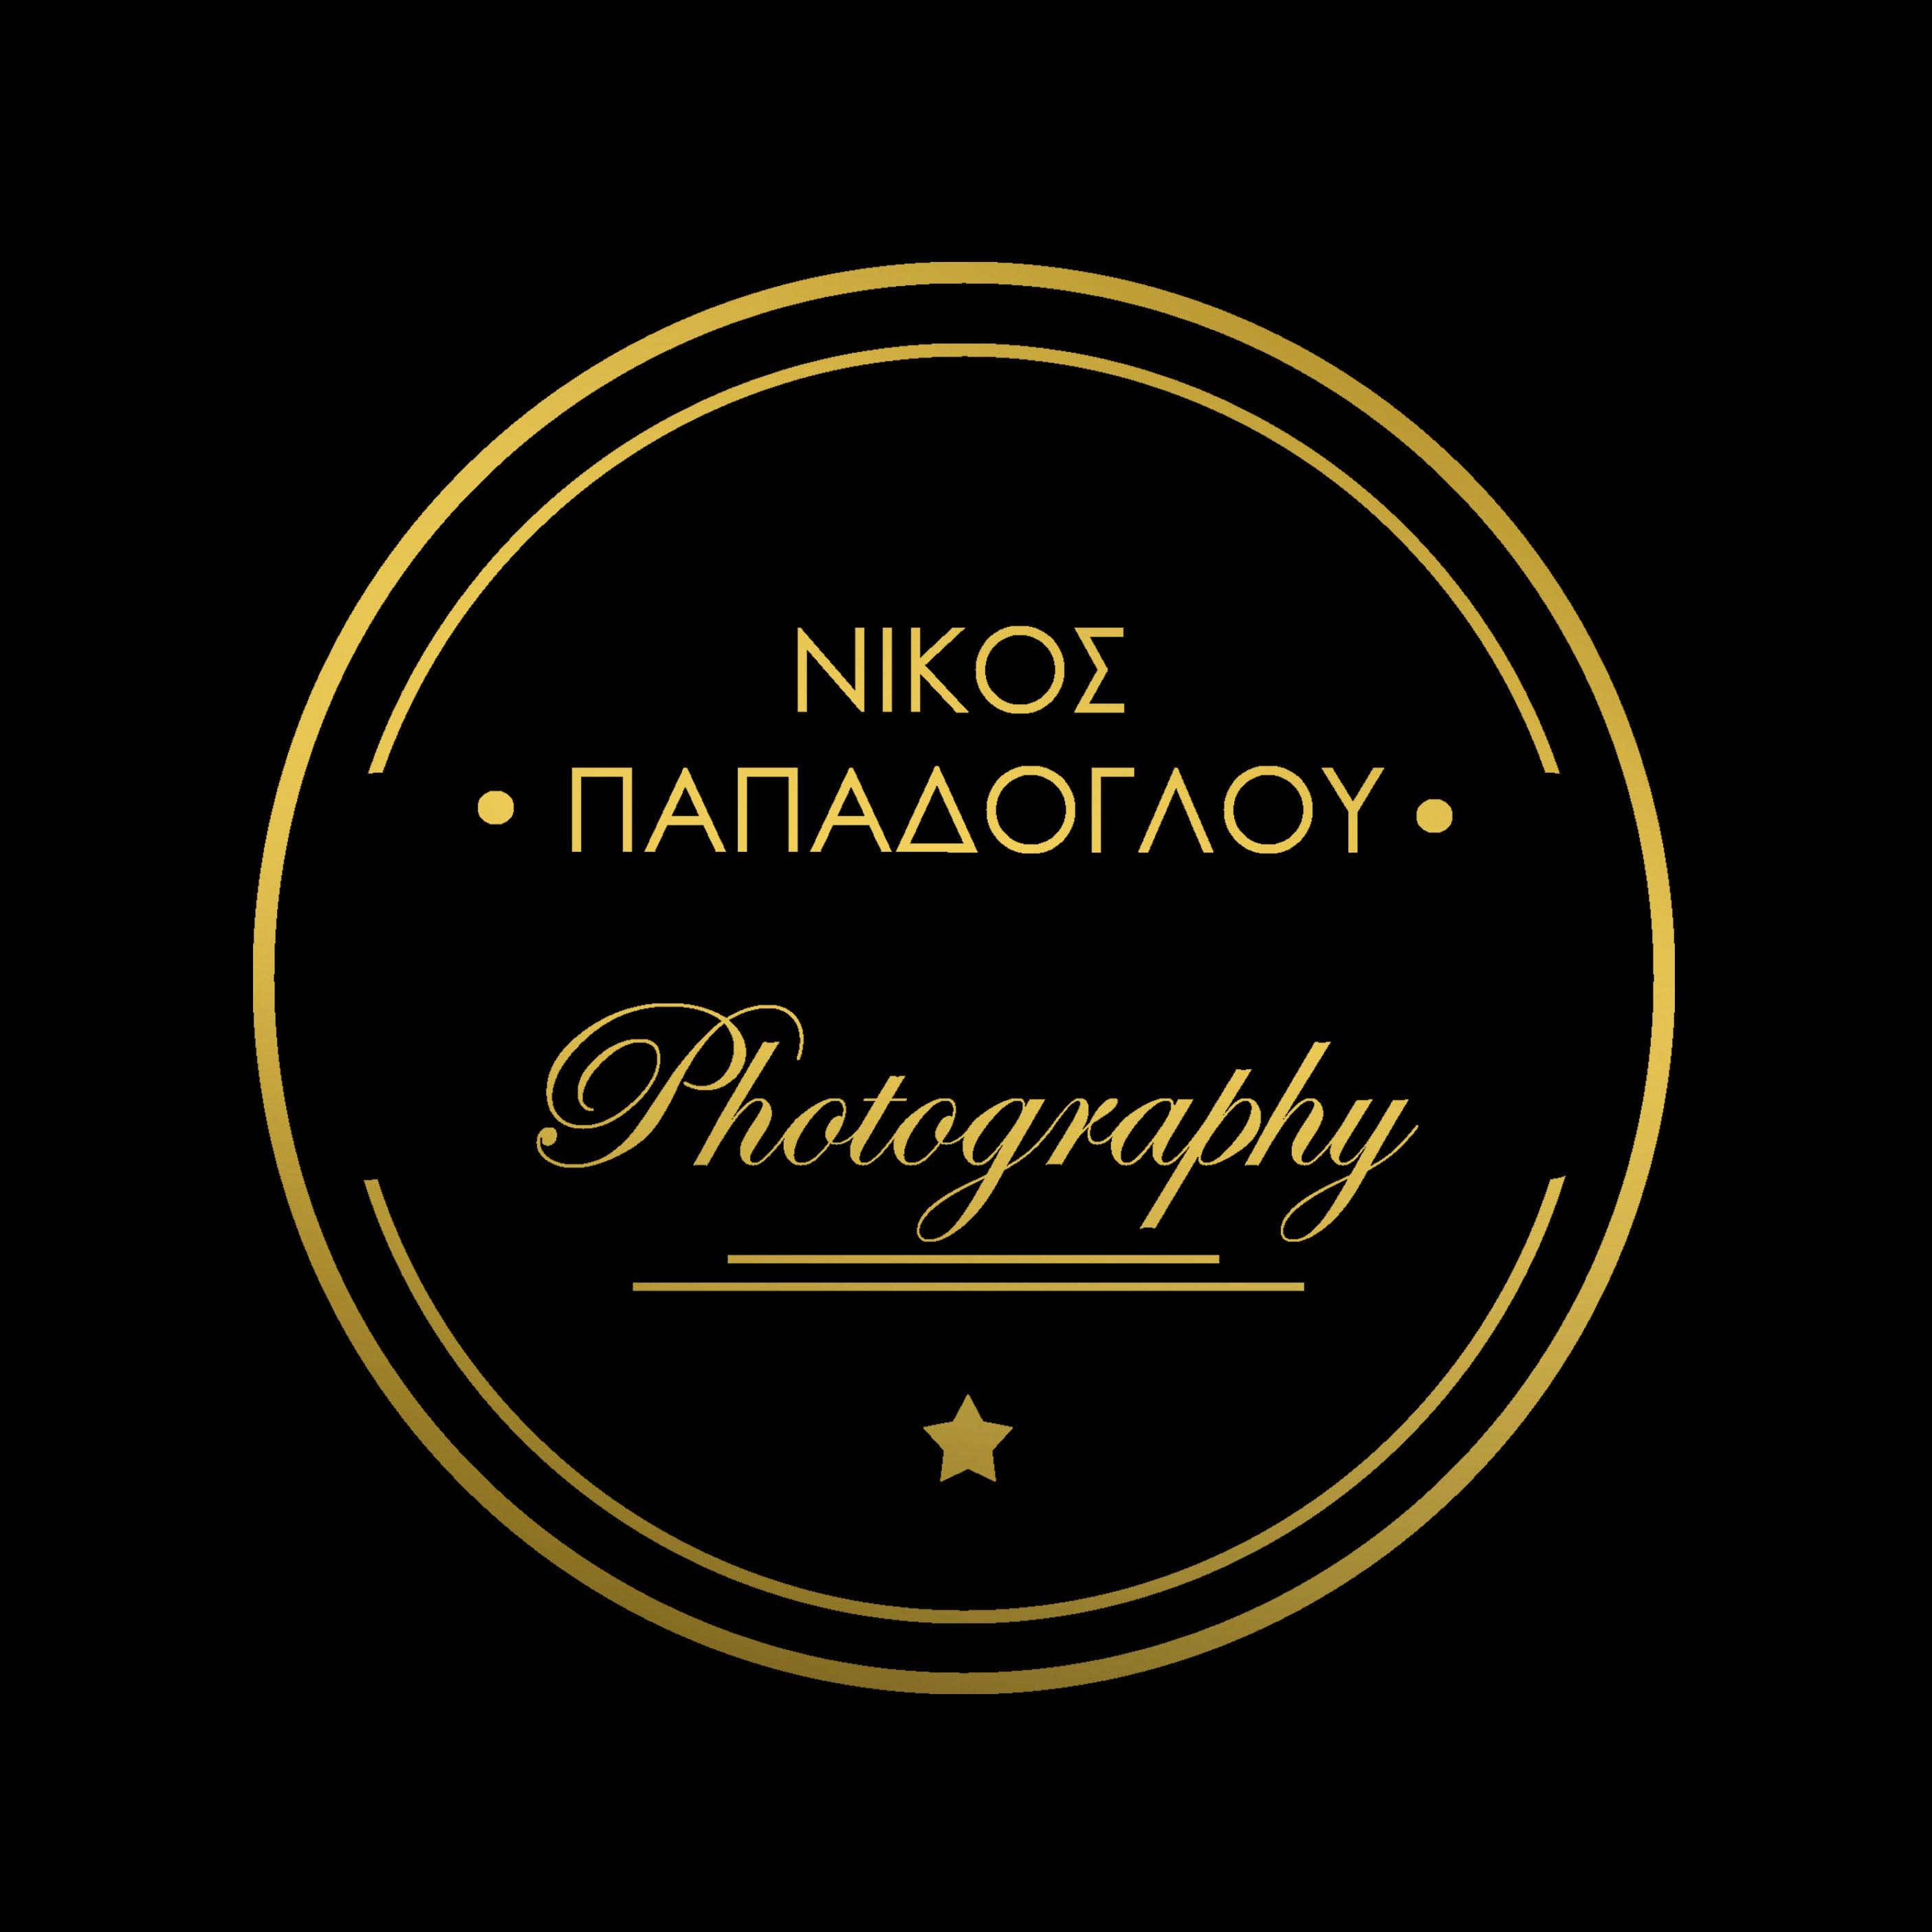 Nikos Papadoglou Photography - Νίκος Παπαδόγλου, Φωτογράφοι